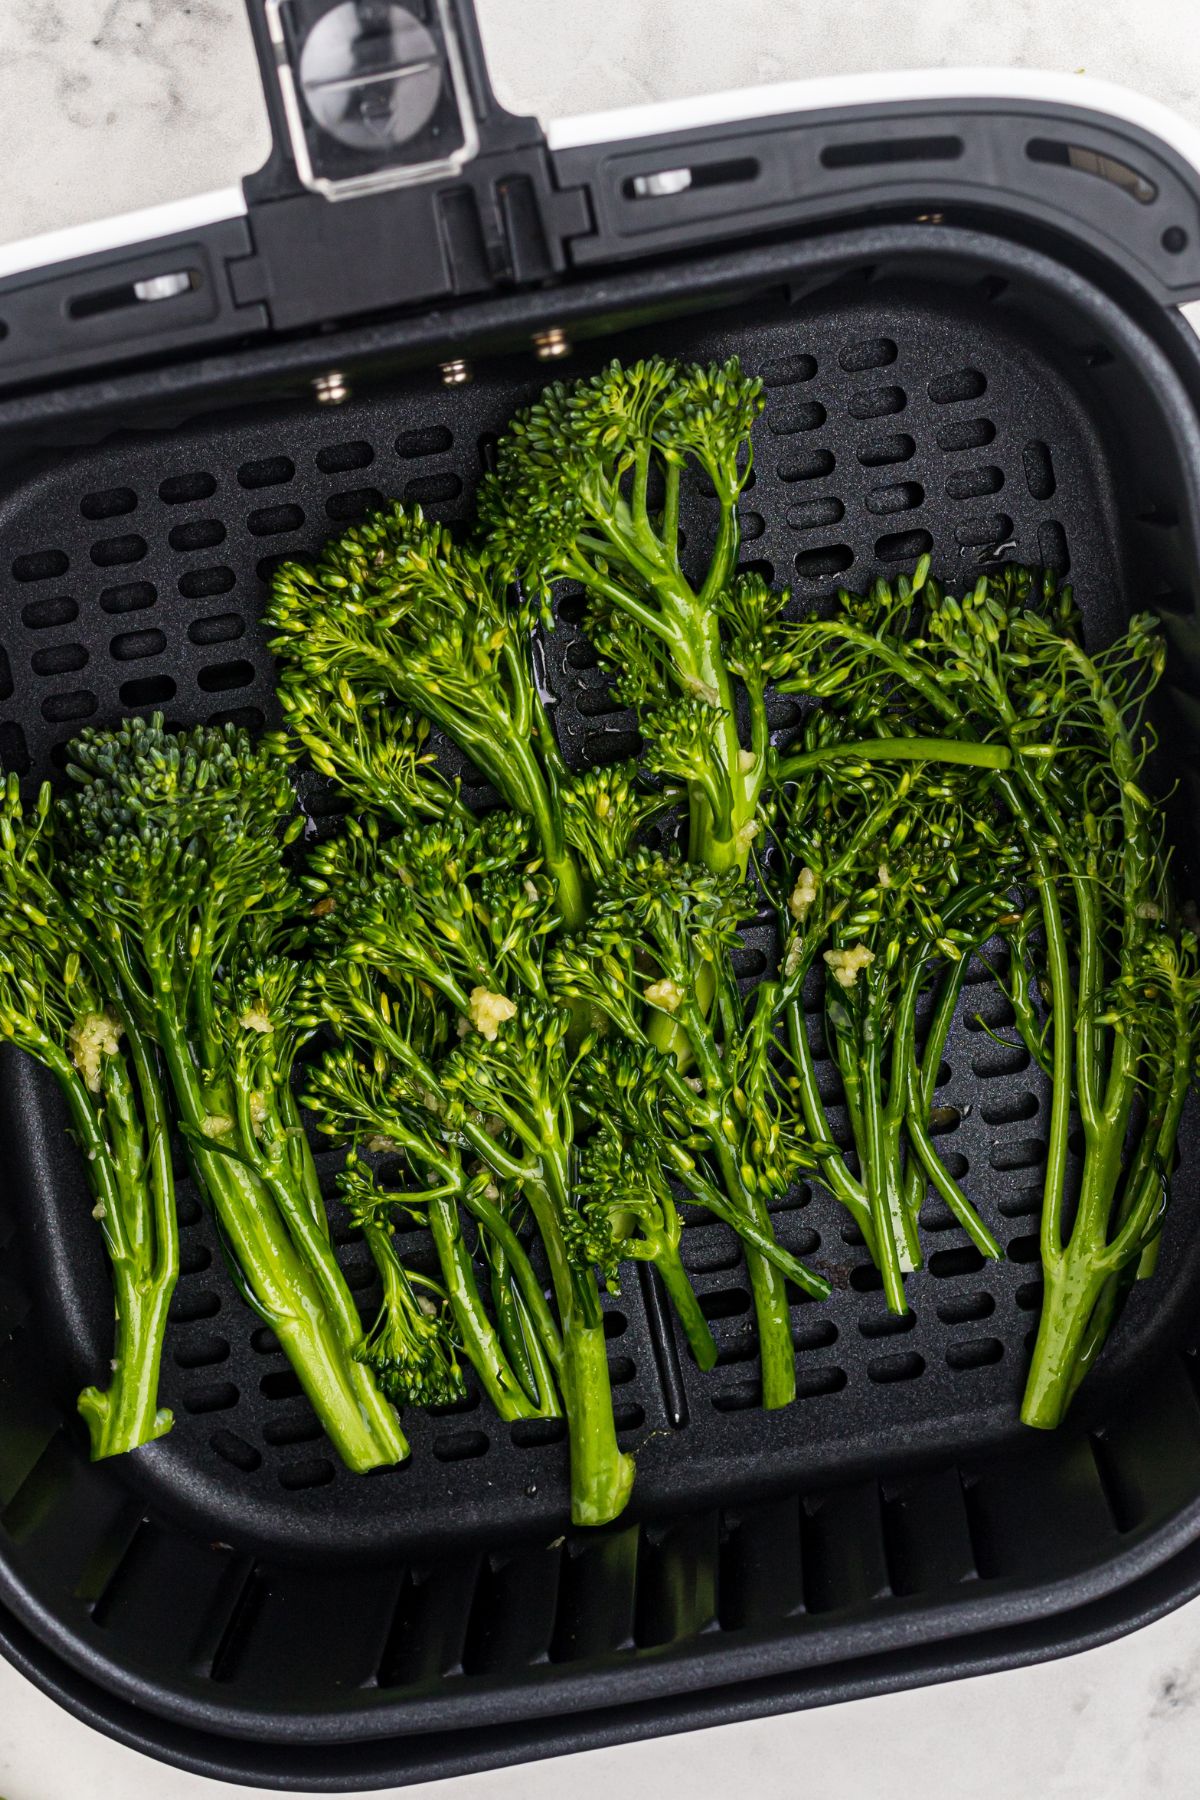 Juicy seasoned broccolini in the air fryer basket before being cooked